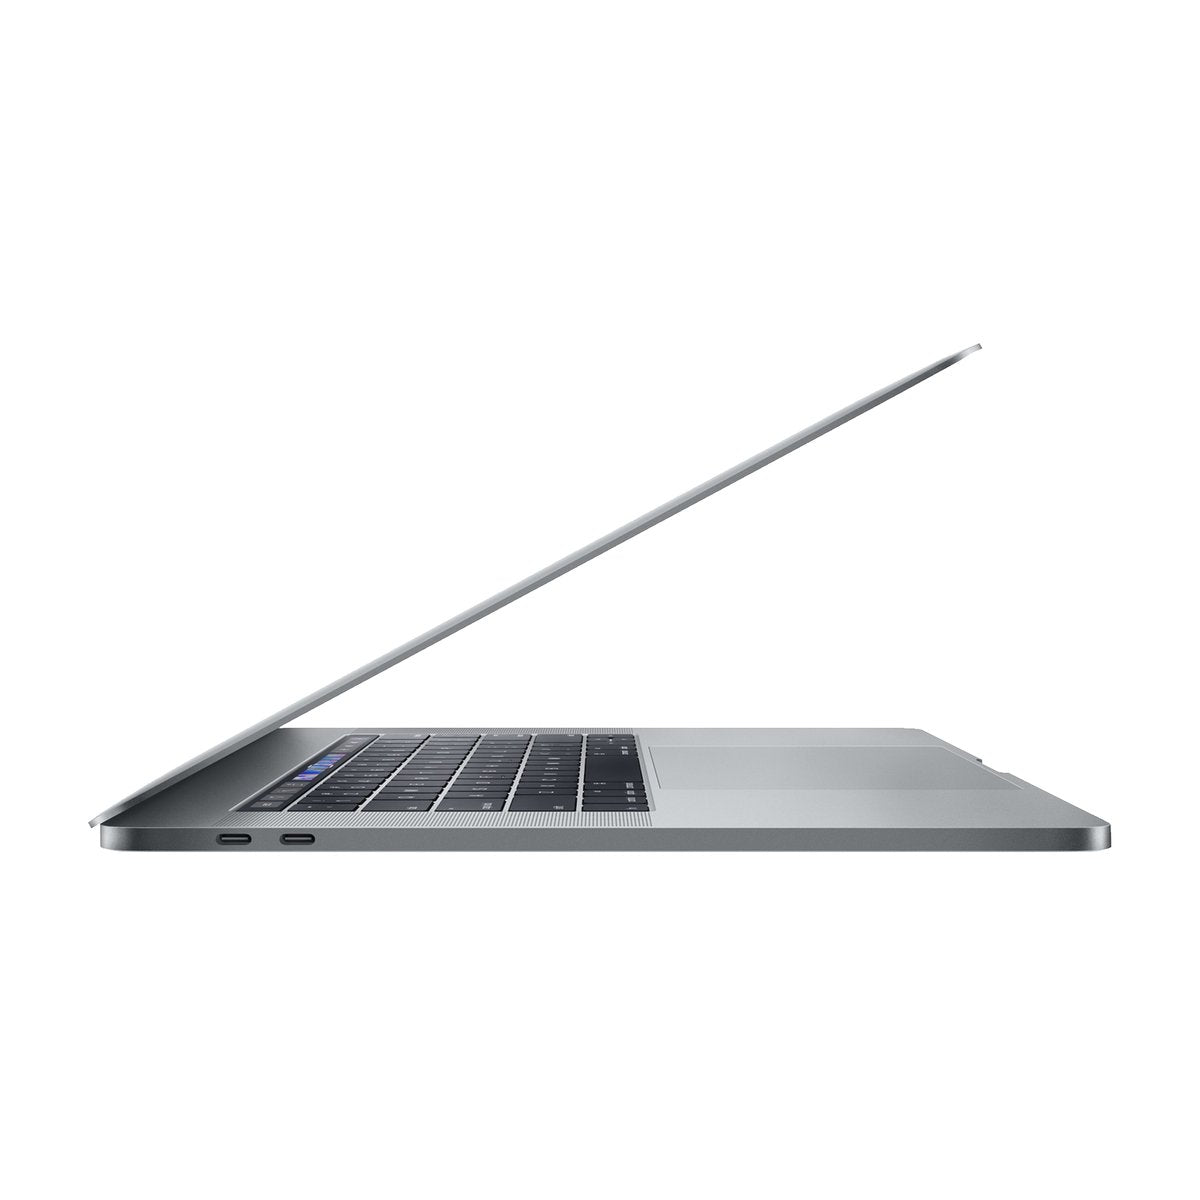 Macbook Pro 13-inch (Touchbar) - 2016 - Core i5 - Space Grey